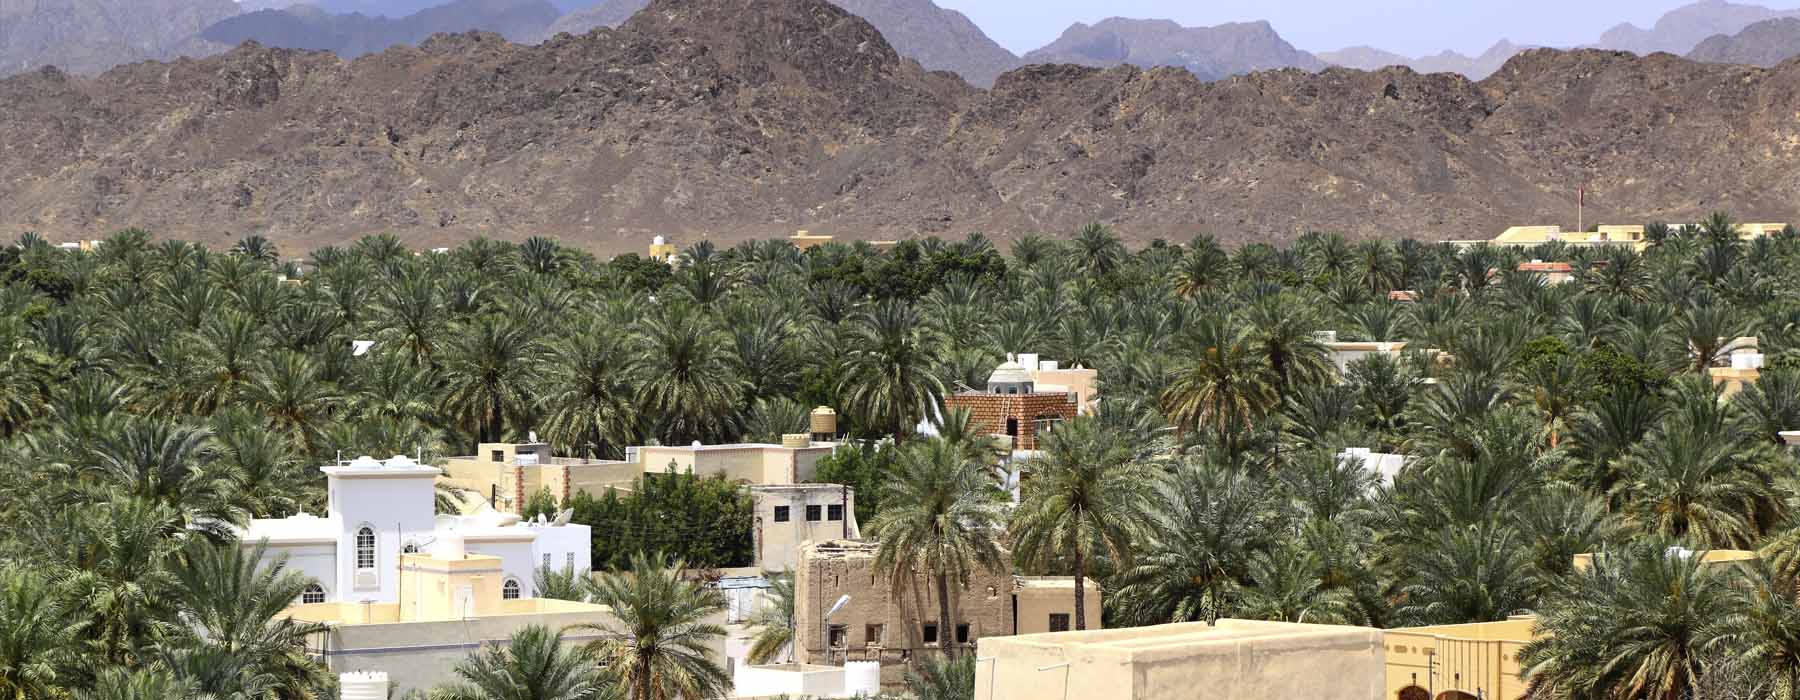 All our Oman<br class="hidden-md hidden-lg" /> Educational Holidays